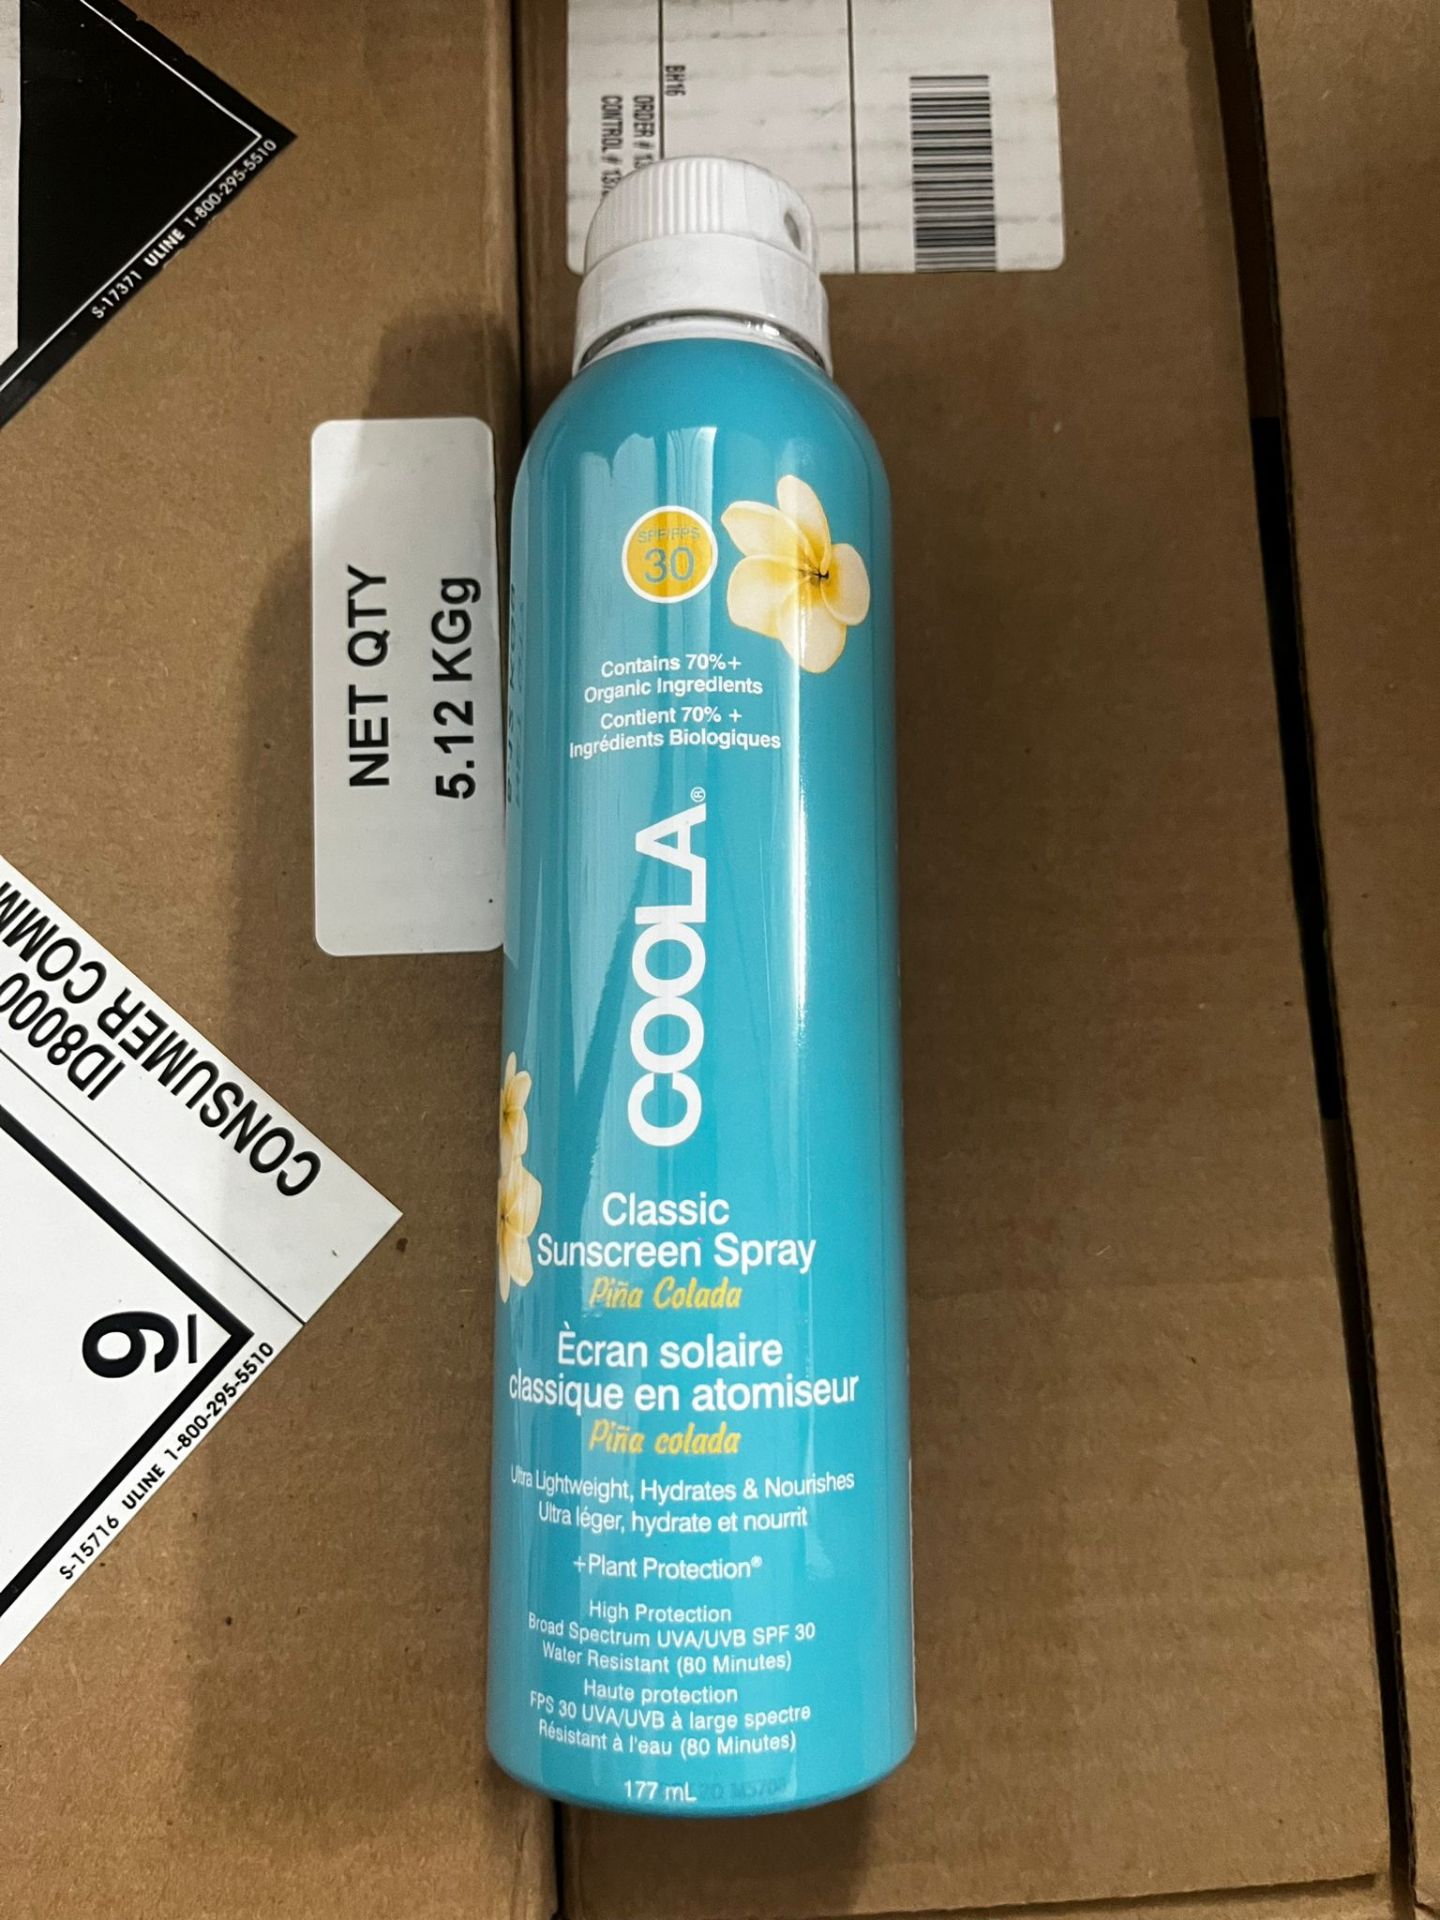 Coola Classic Sunscreen Spray x 46, Est Retail Value £1240